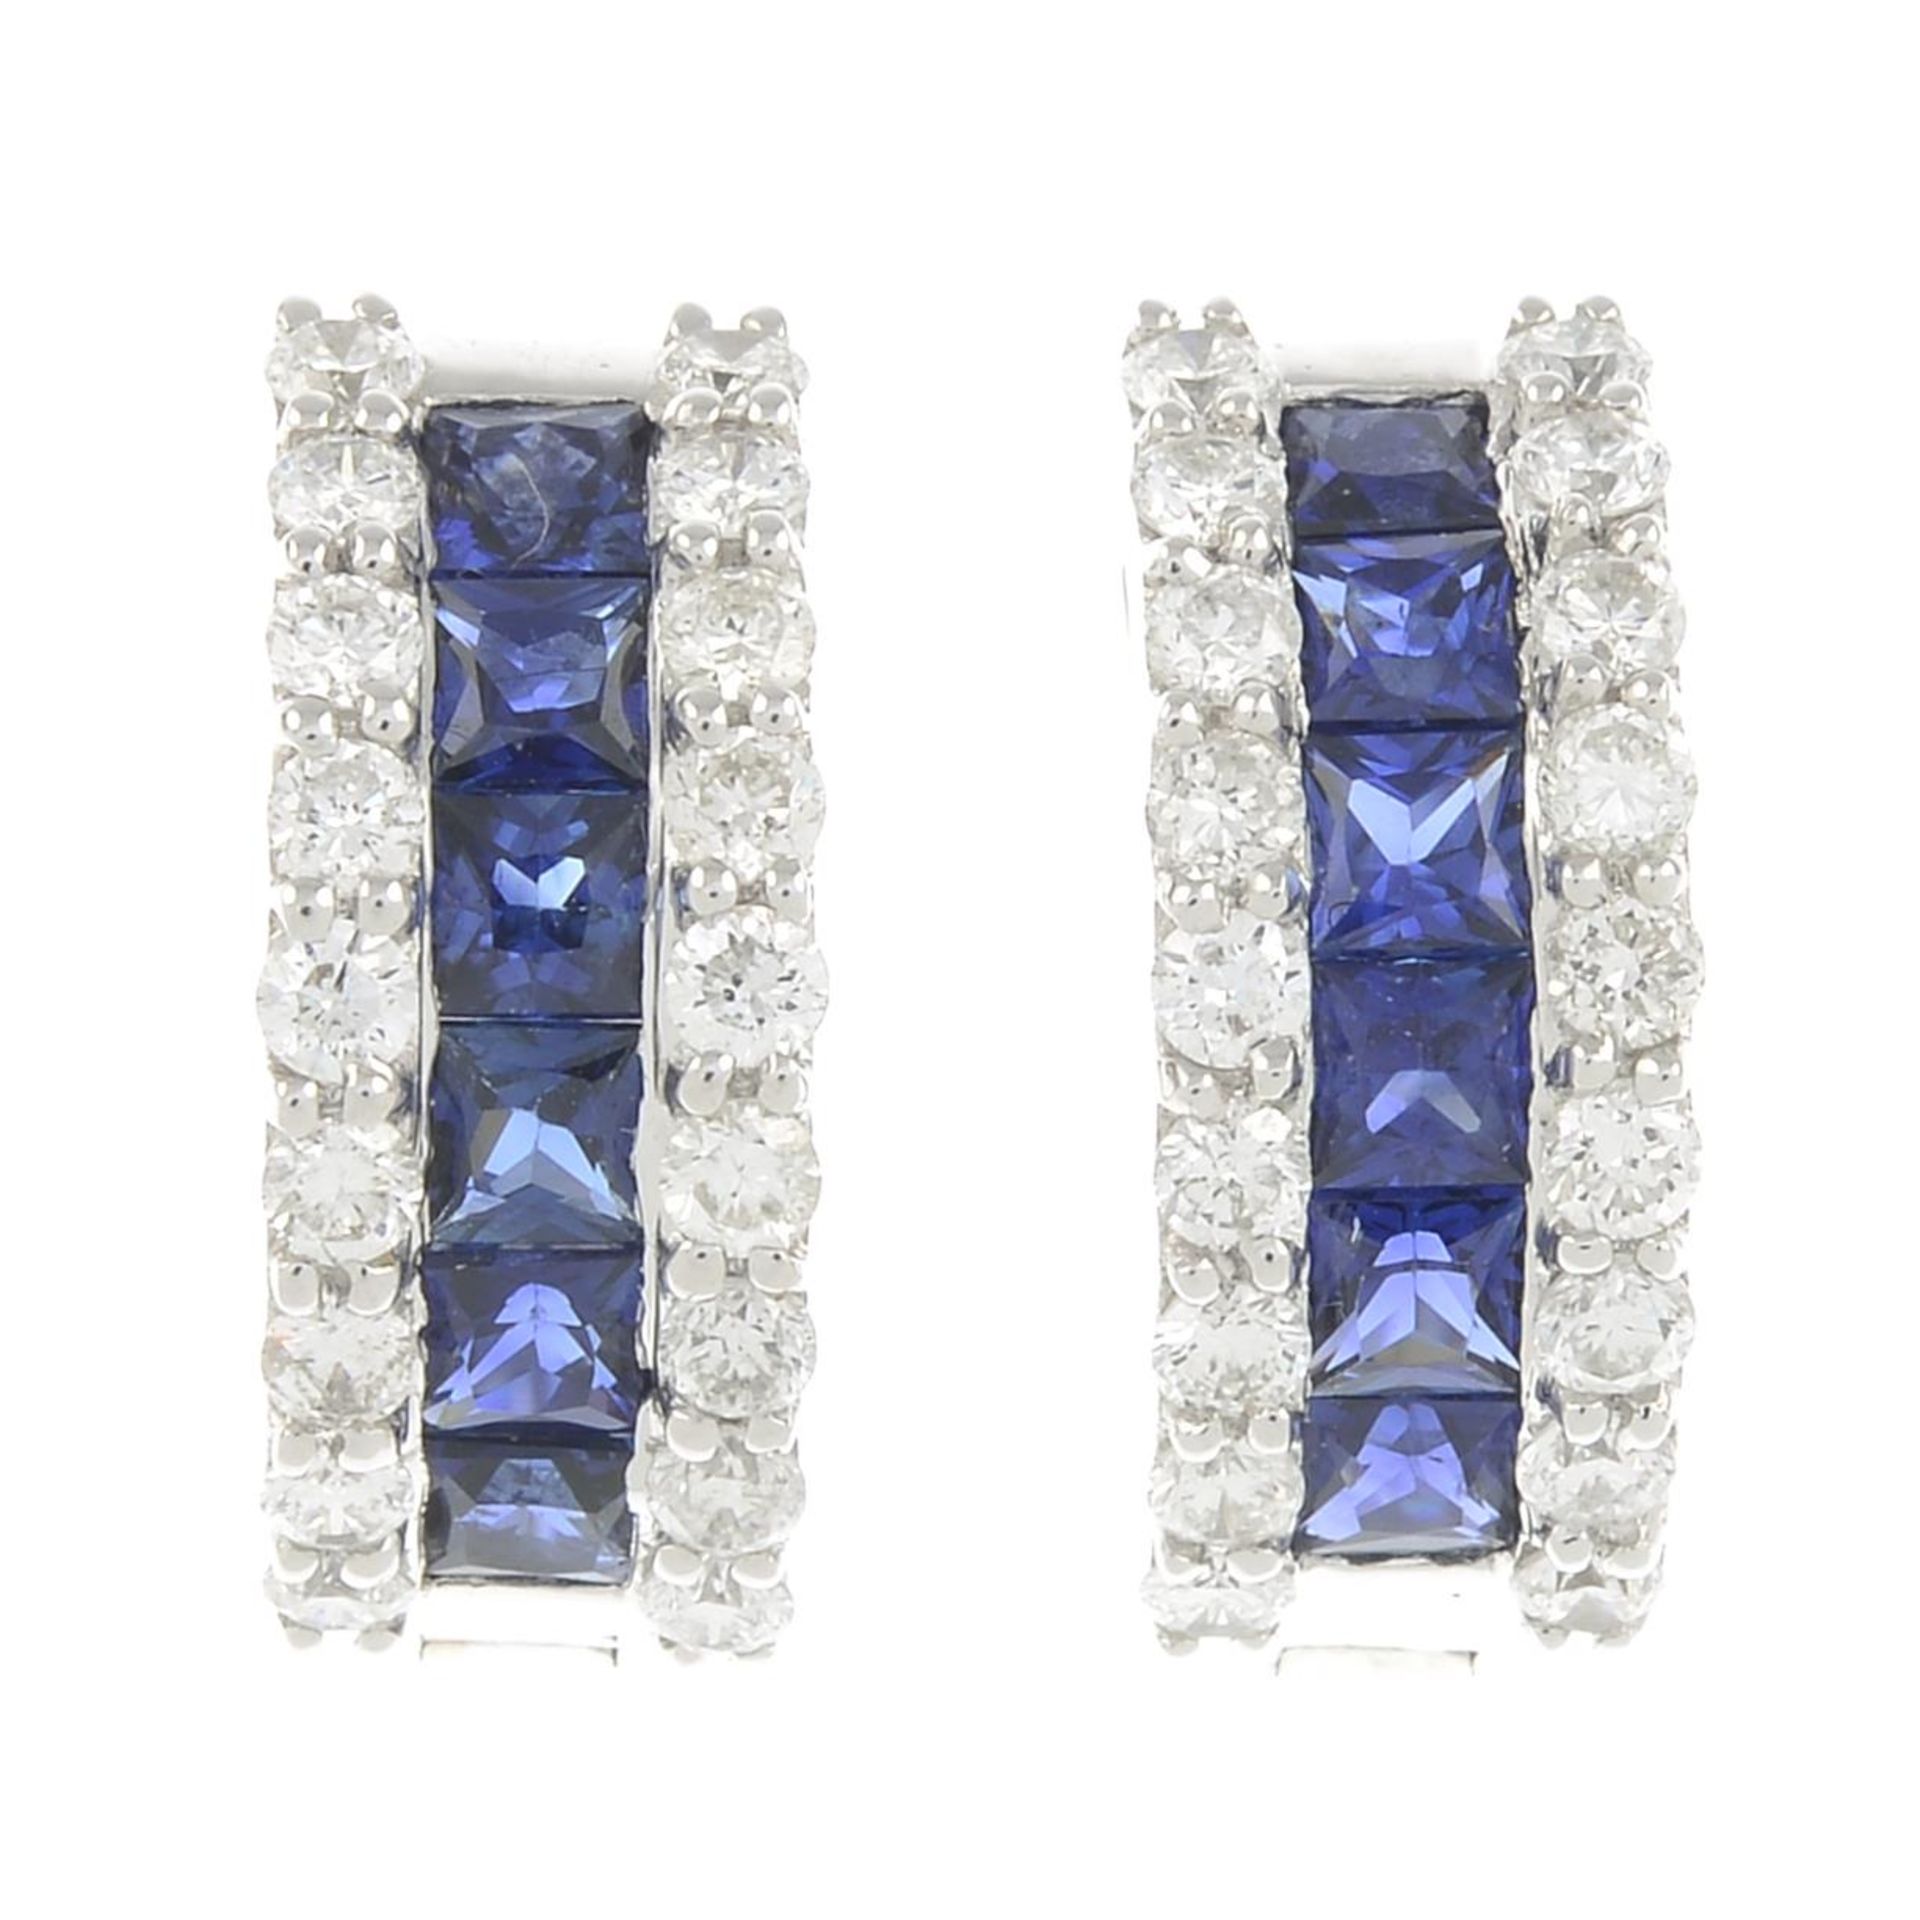 A pair of sapphire and brilliant-cut diamond earrings.Total sapphire weight 1.62cts.Total diamond